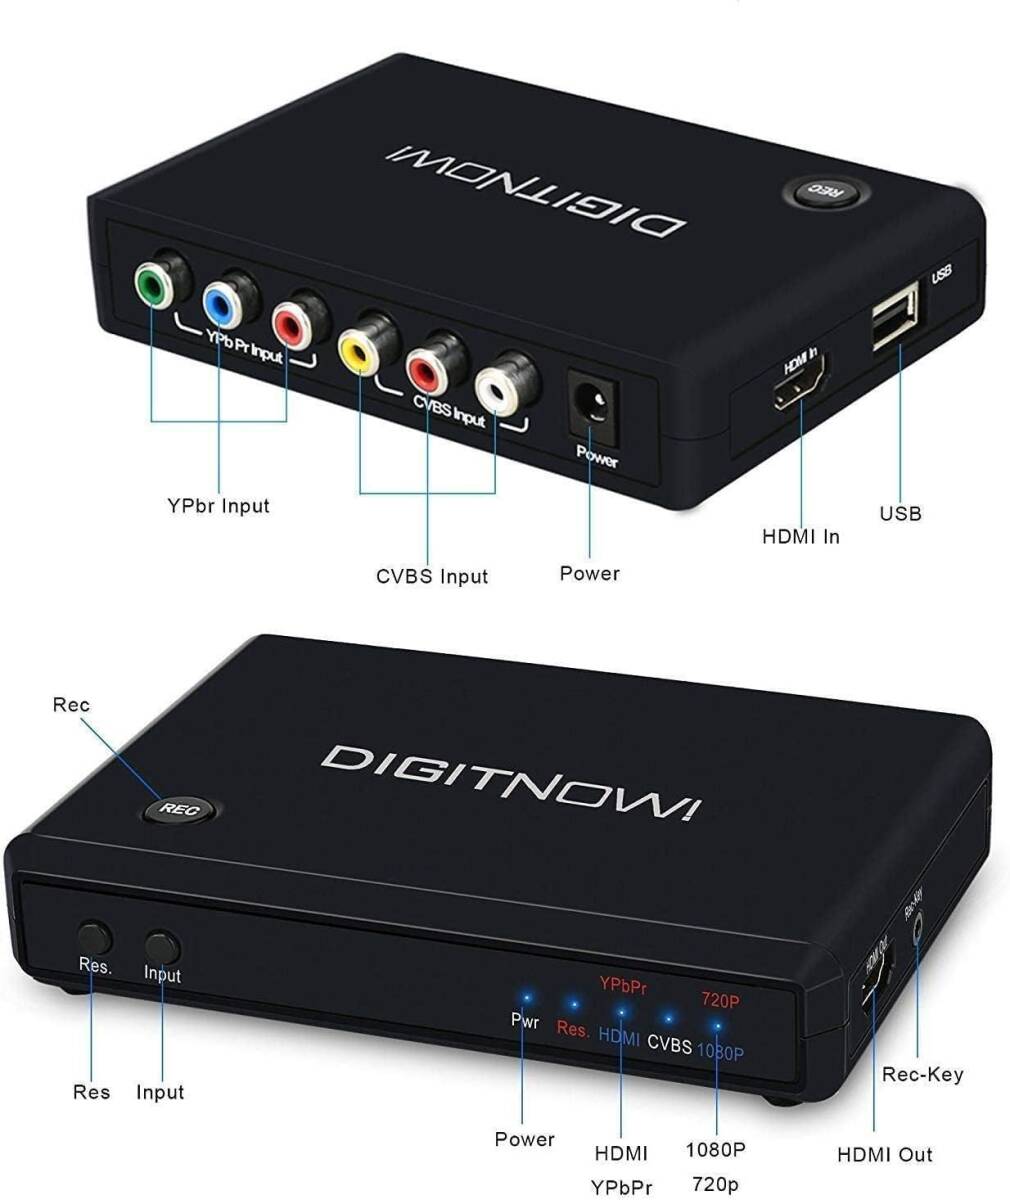 HD game cap tea /HDMI video converter / recorder PS4 Xbox One/Xbox 360 LiveTV PVR DVR etc. HDMI/CVBS input .HDMI output . correspondence full HD